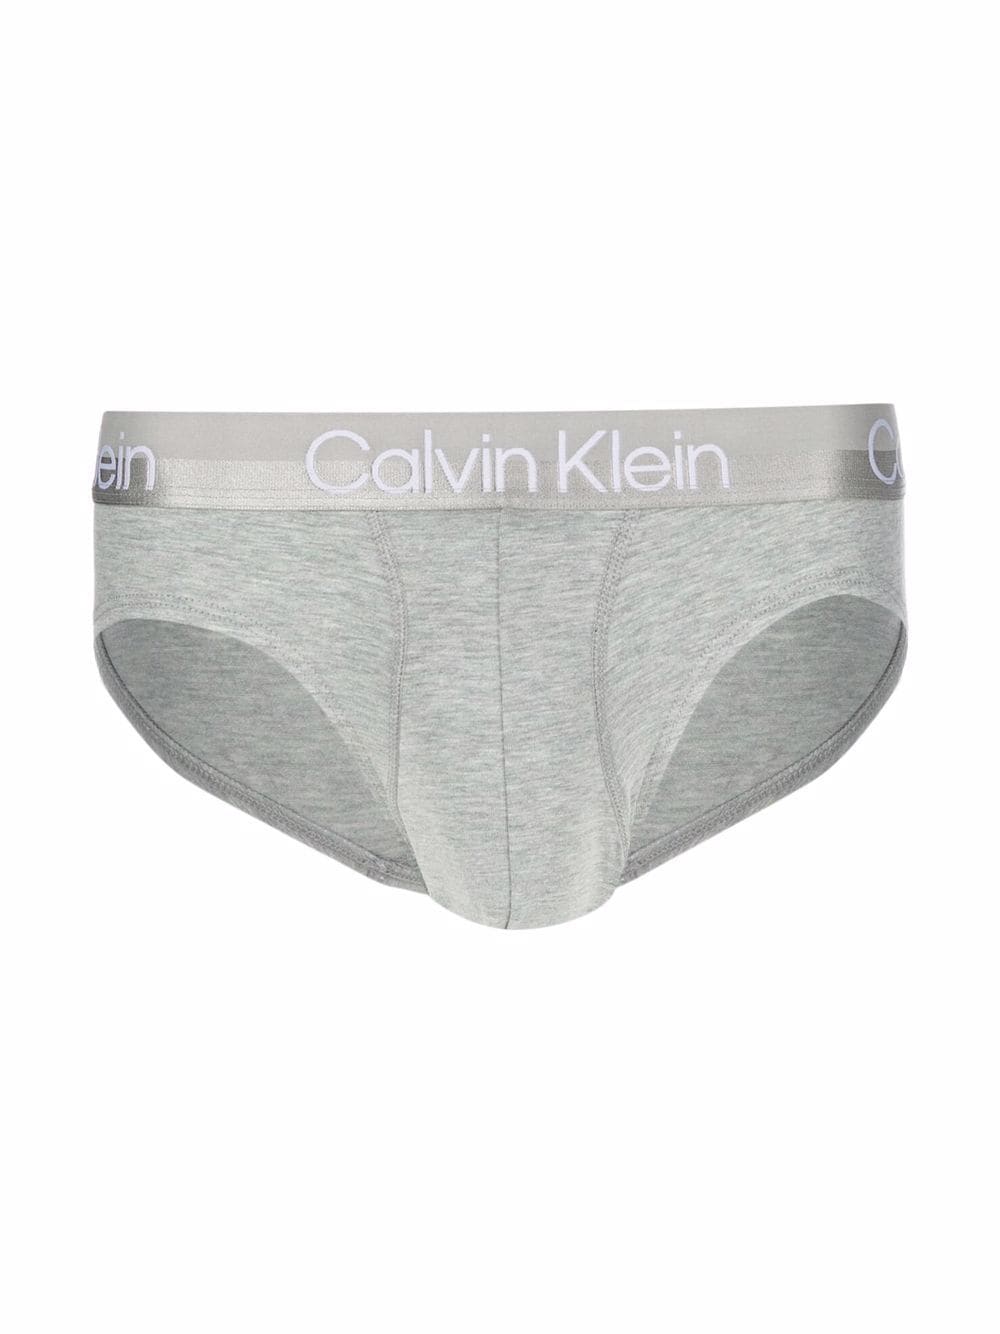 фото Calvin klein underwear комплект из трех трусов-брифов с логотипом